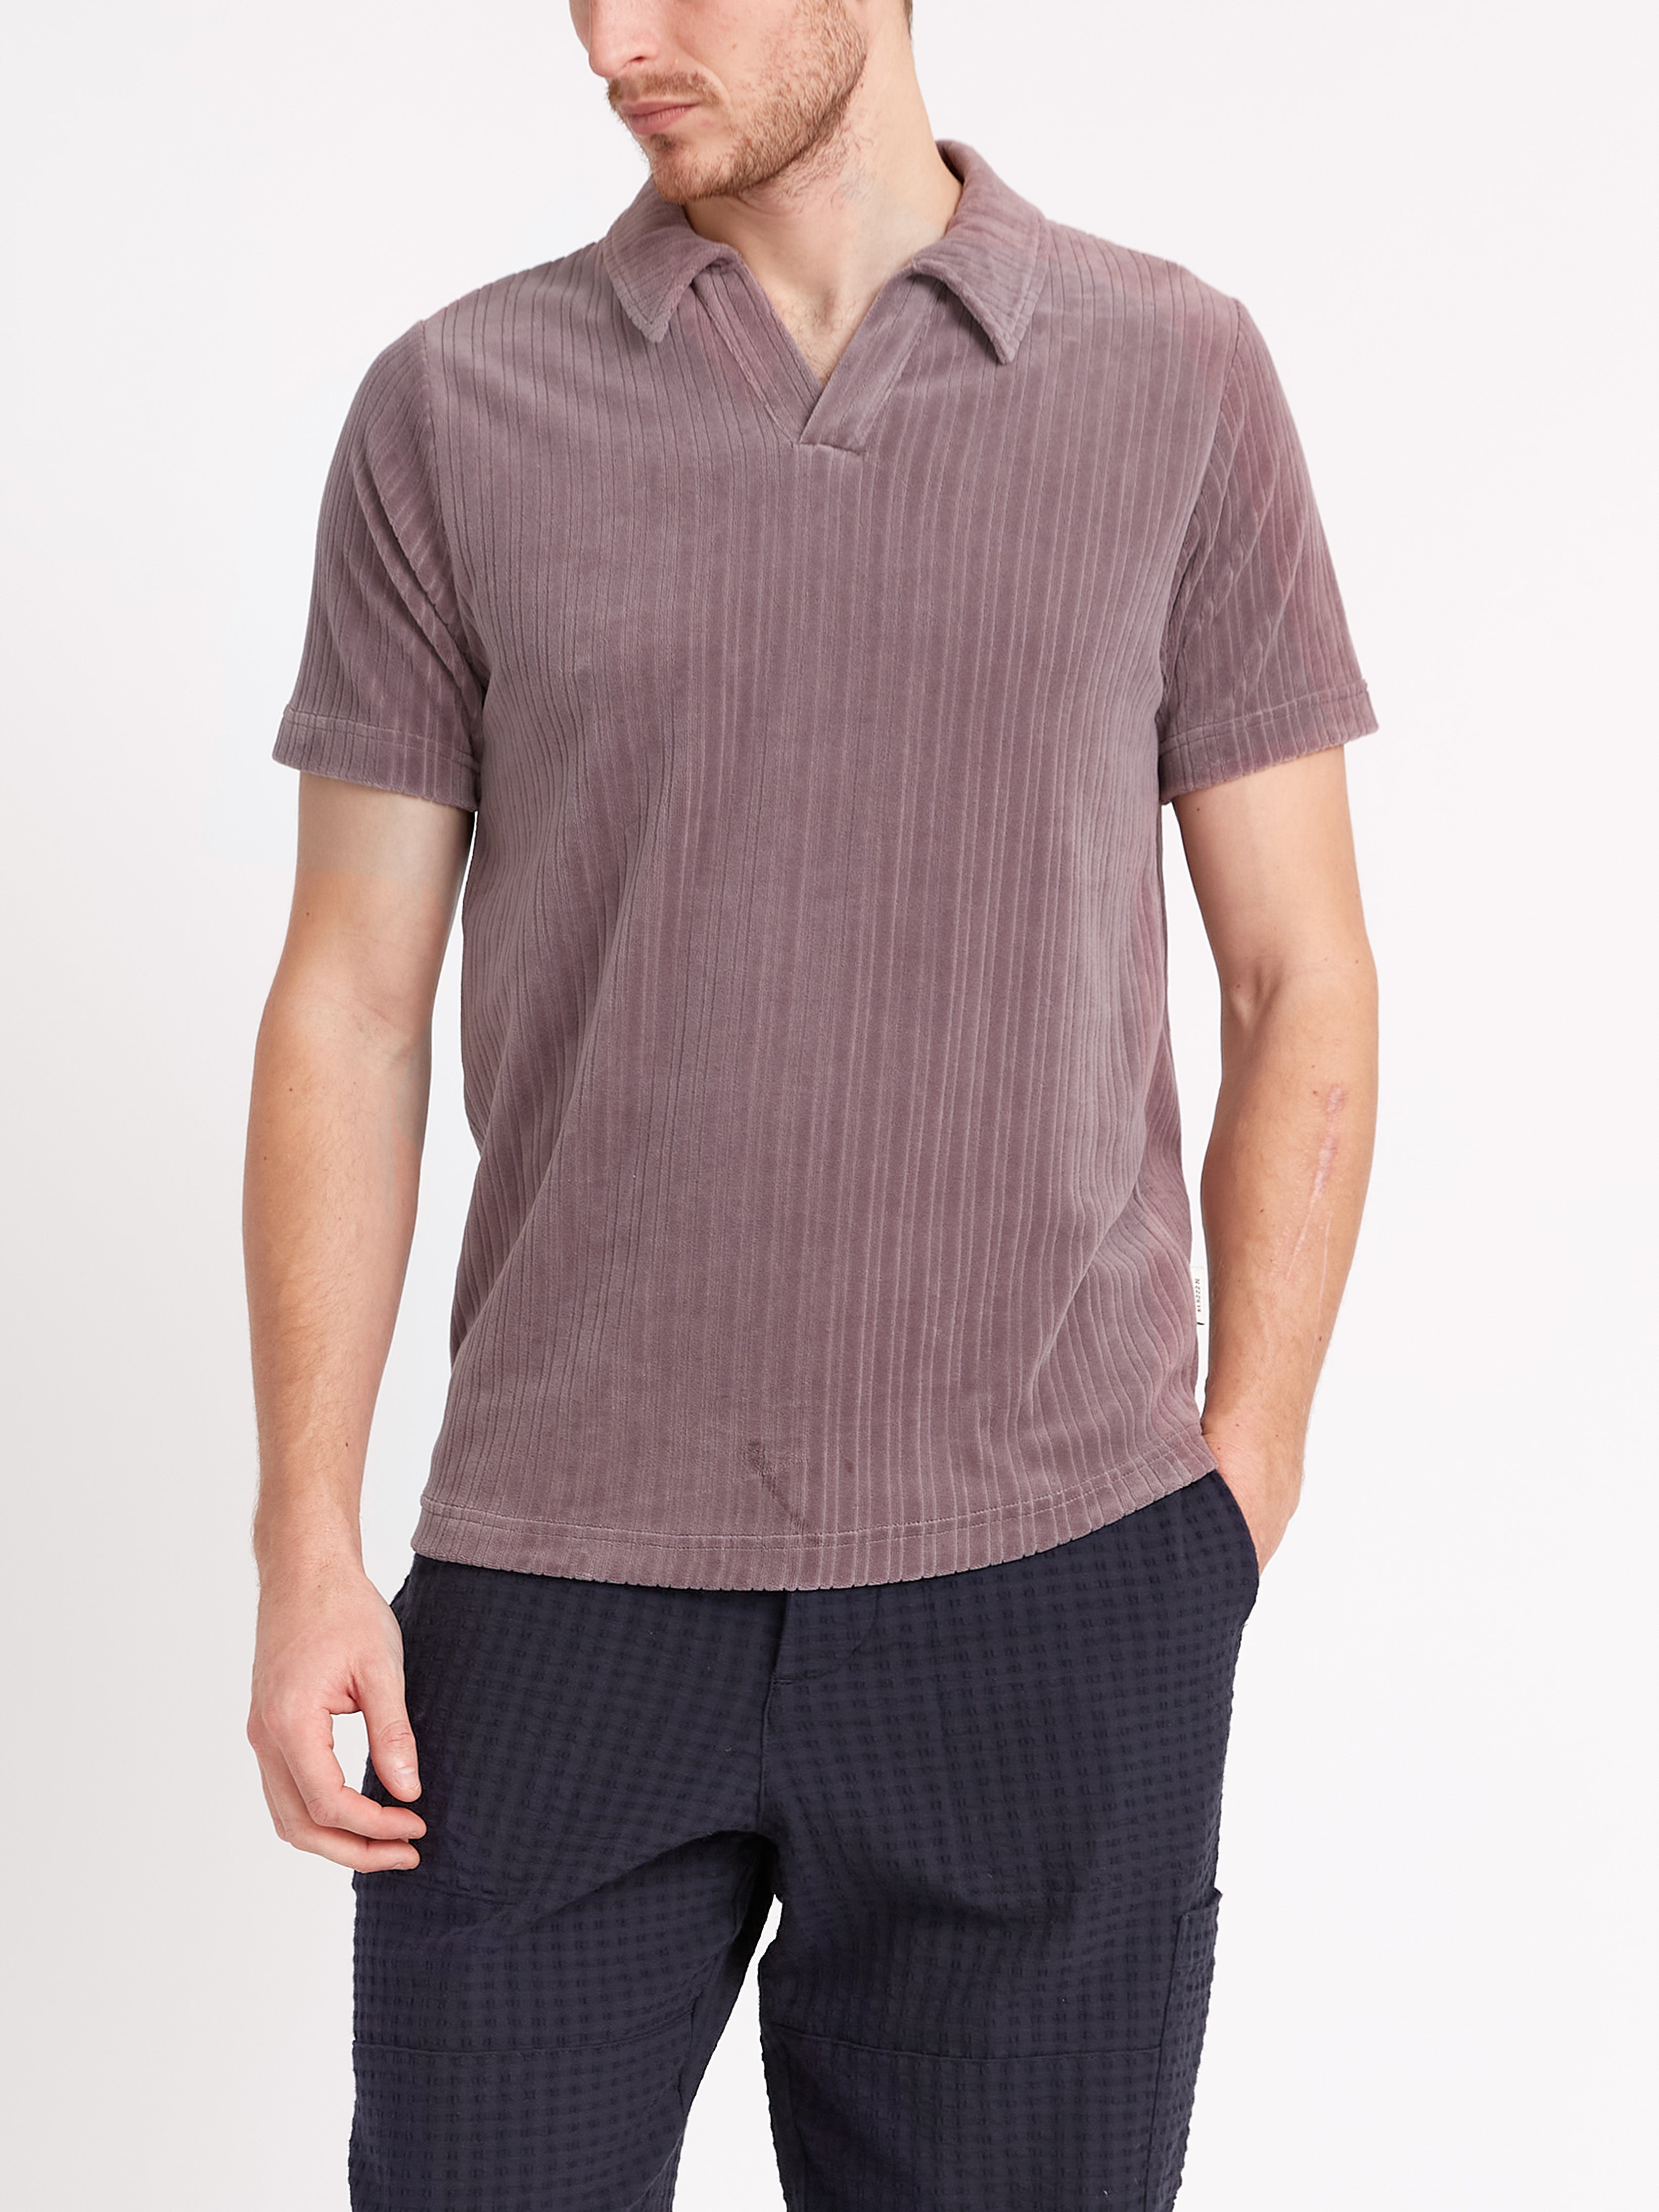 Austell Short Sleeve Polo Shirt Willow Mauve